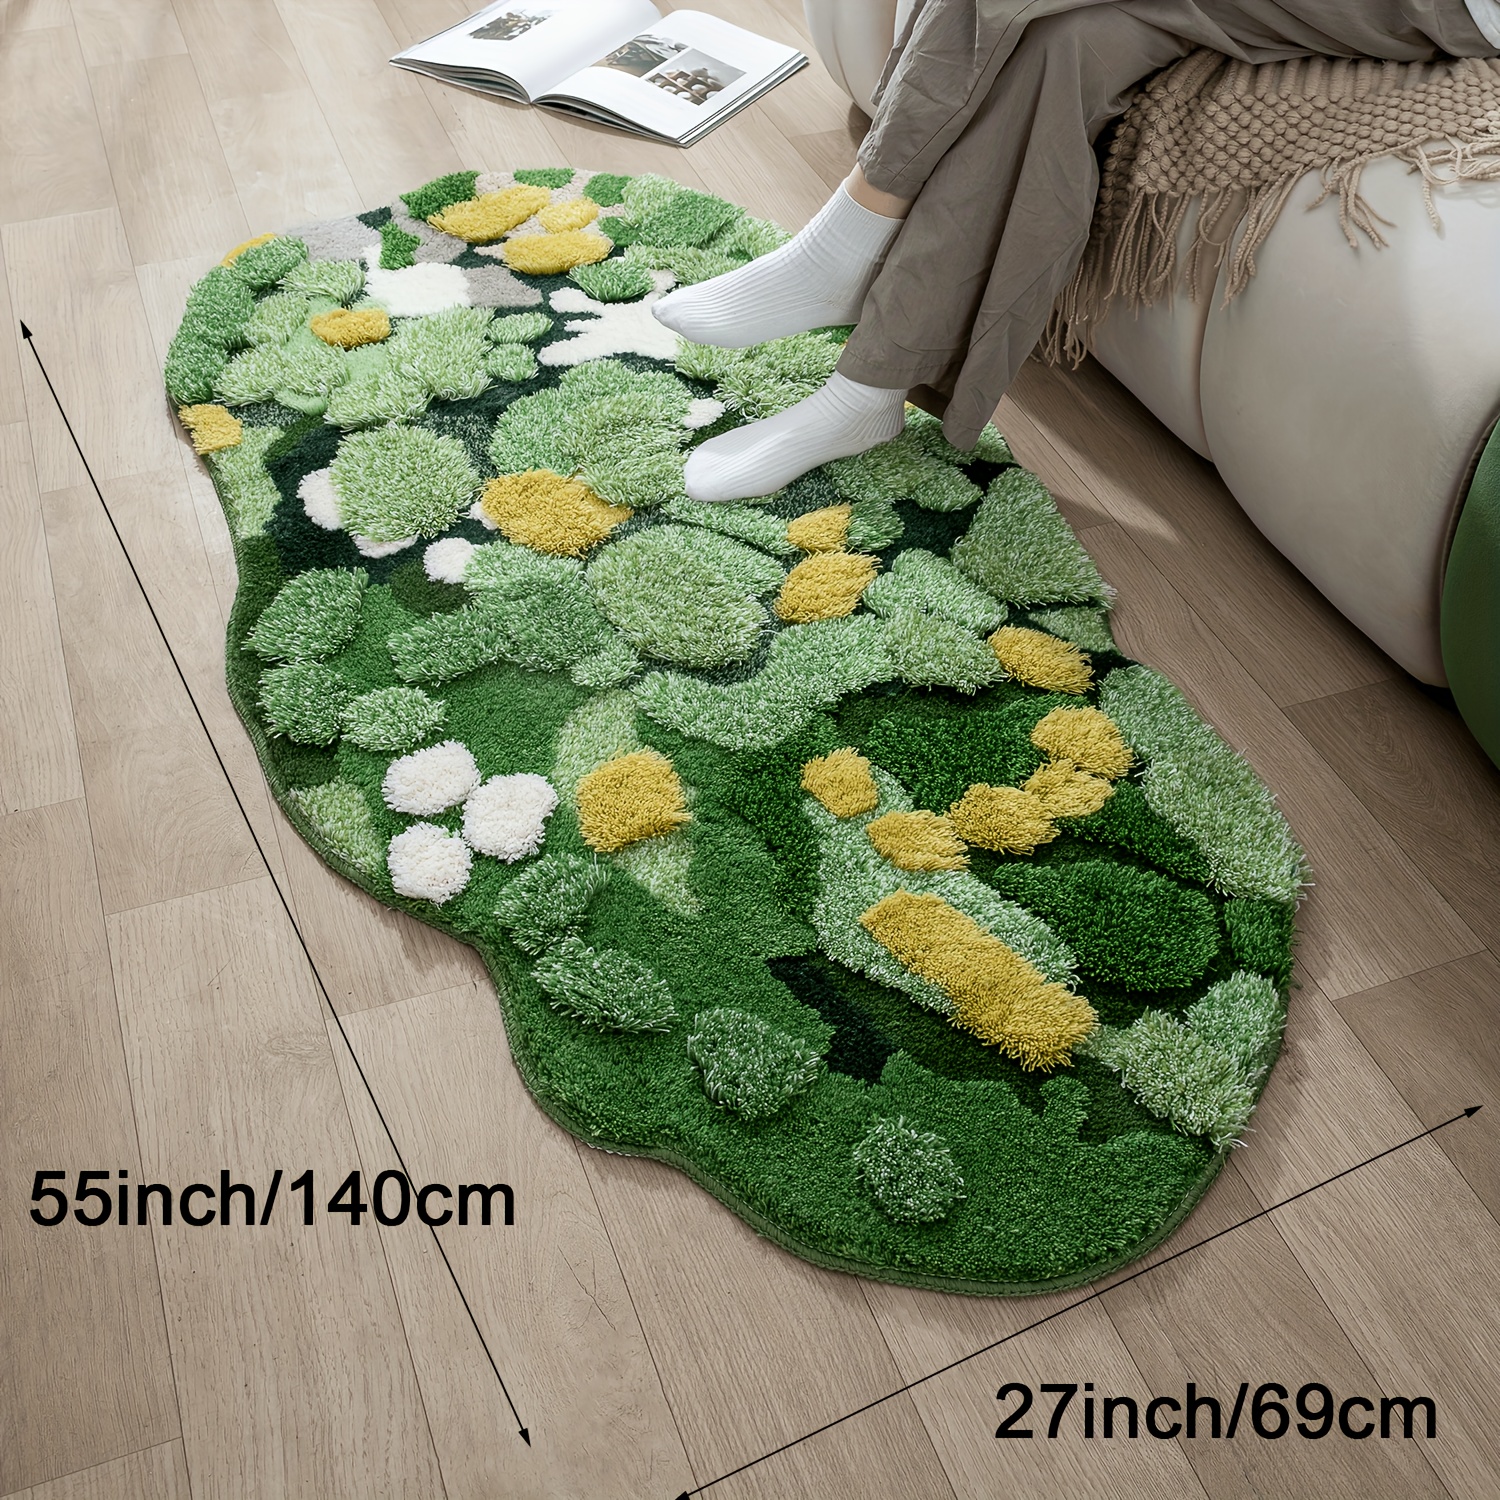 Moss Carpet for your Bathroom : r/InteriorDesign